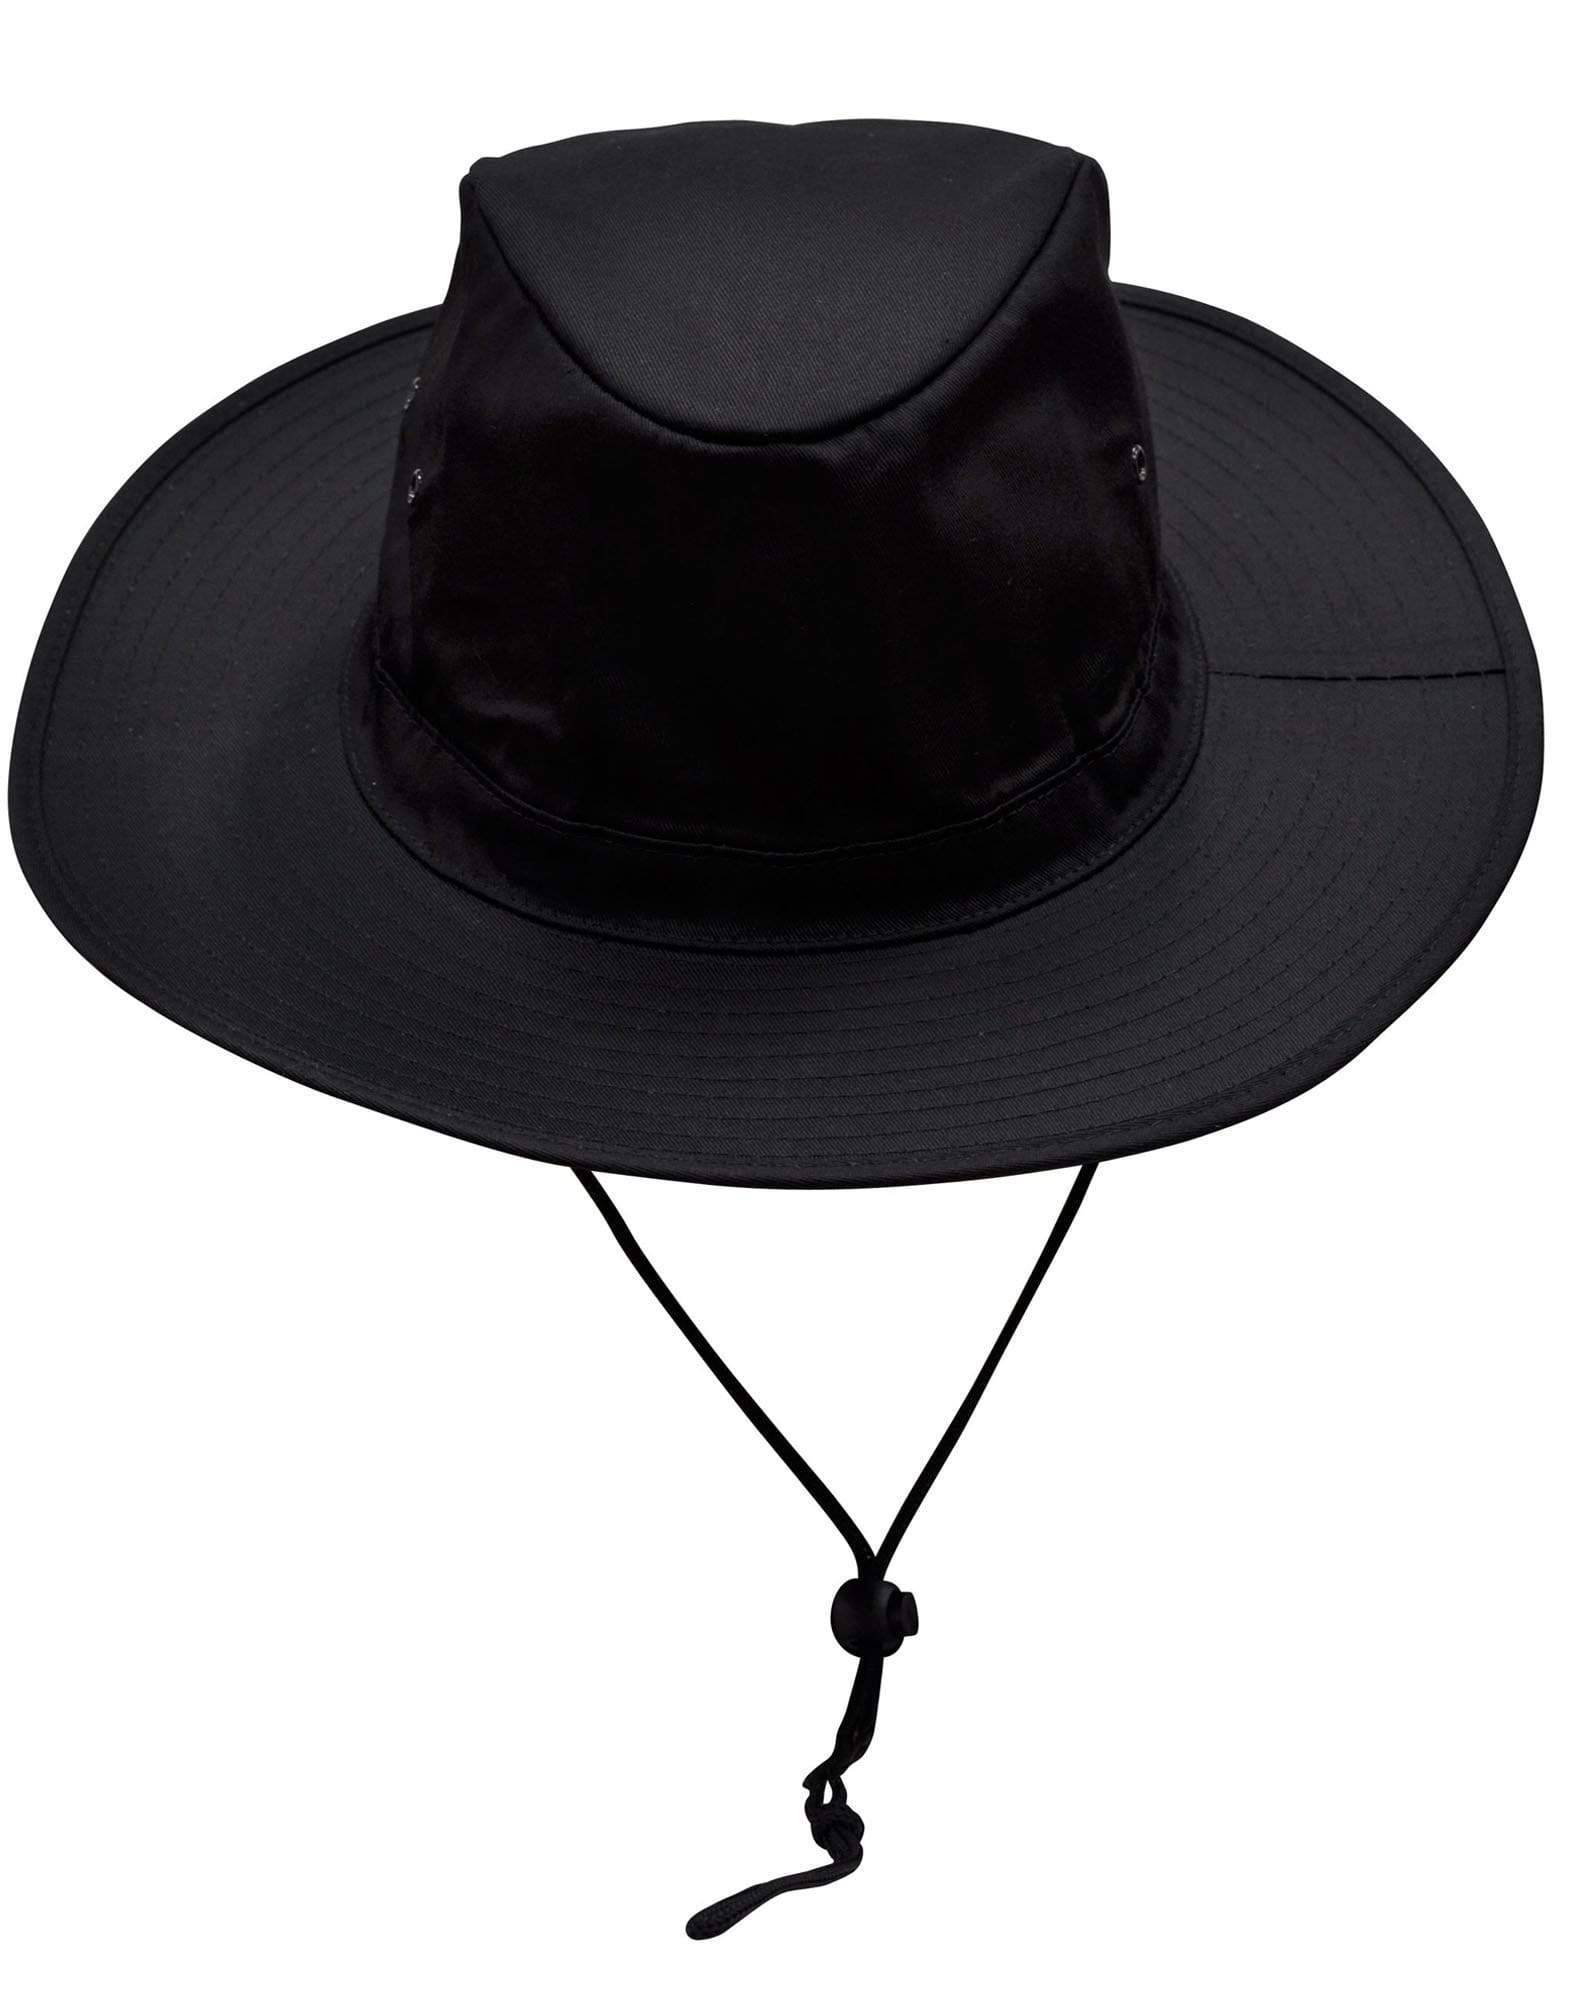 Slouch Hat With Break-away Clip Strap H1026 Active Wear Winning Spirit Black S 